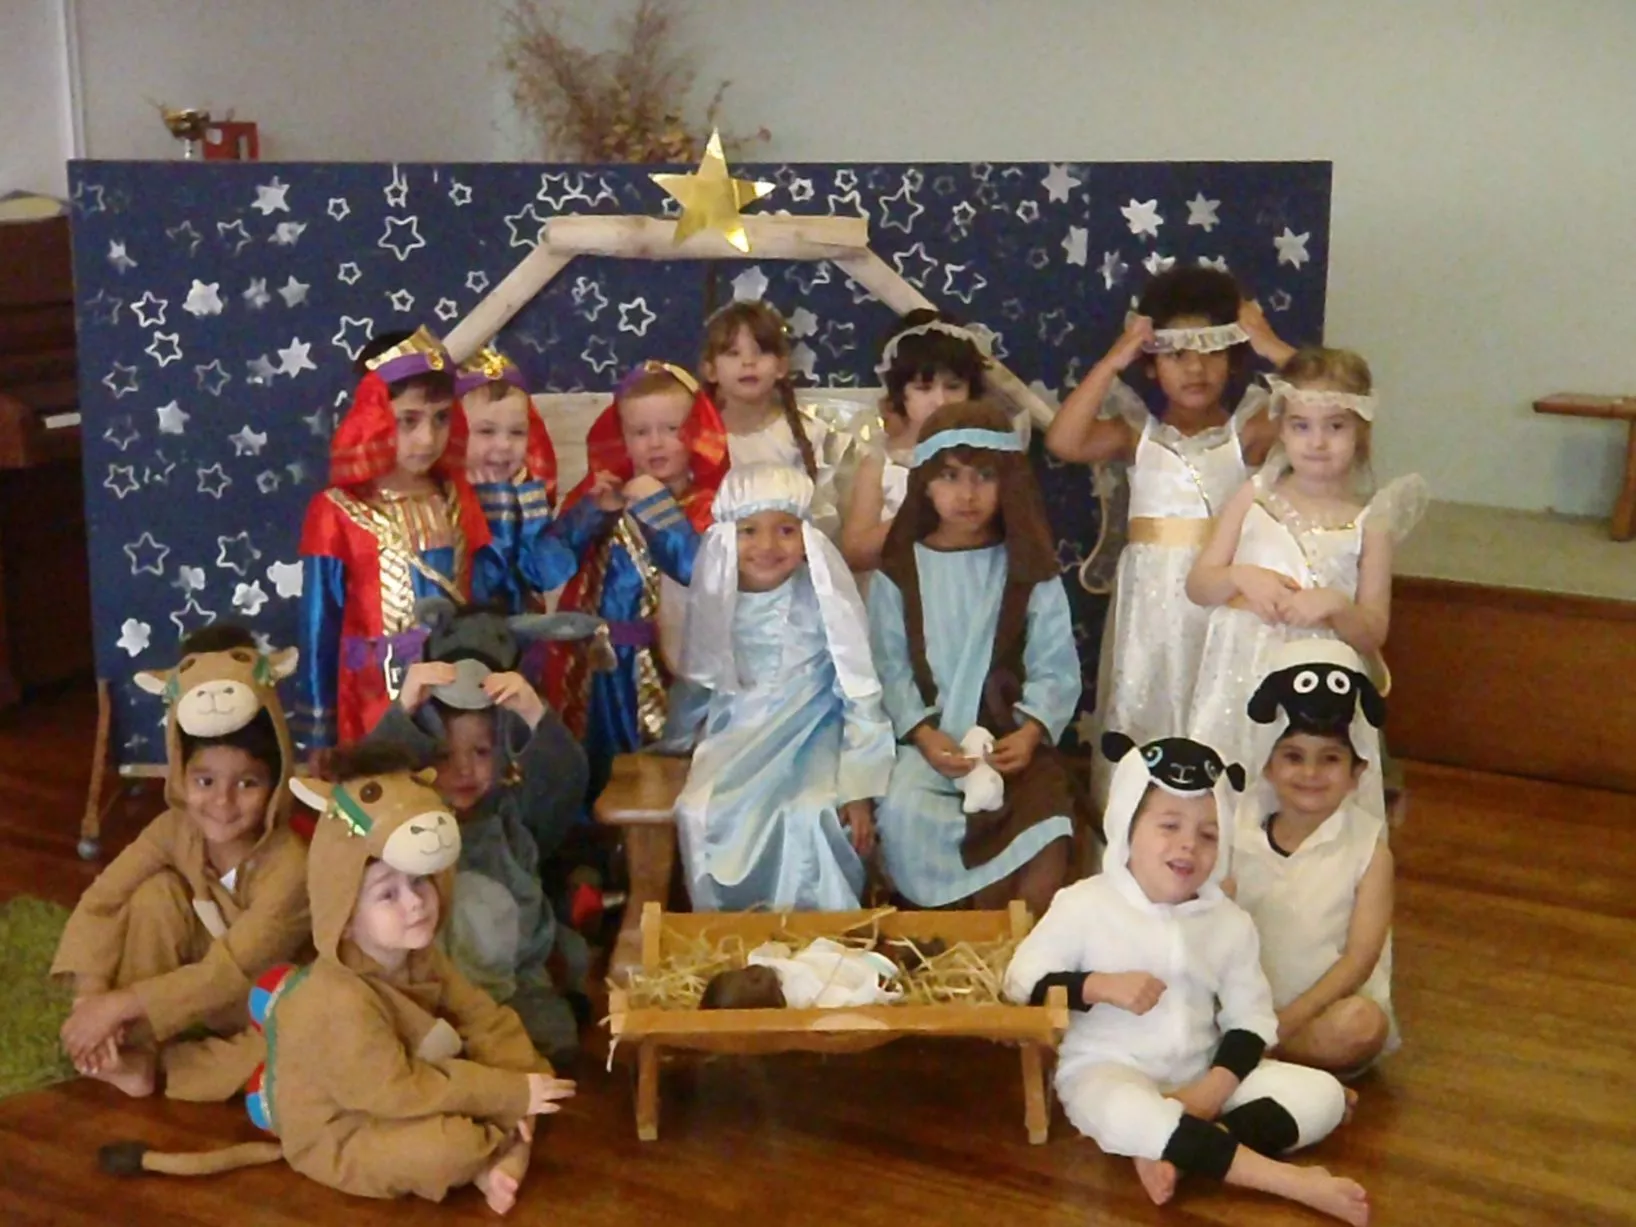 Nativity 2014: Huddersfield Christmas plays with schools in A-Z order - Huddersfield Examiner